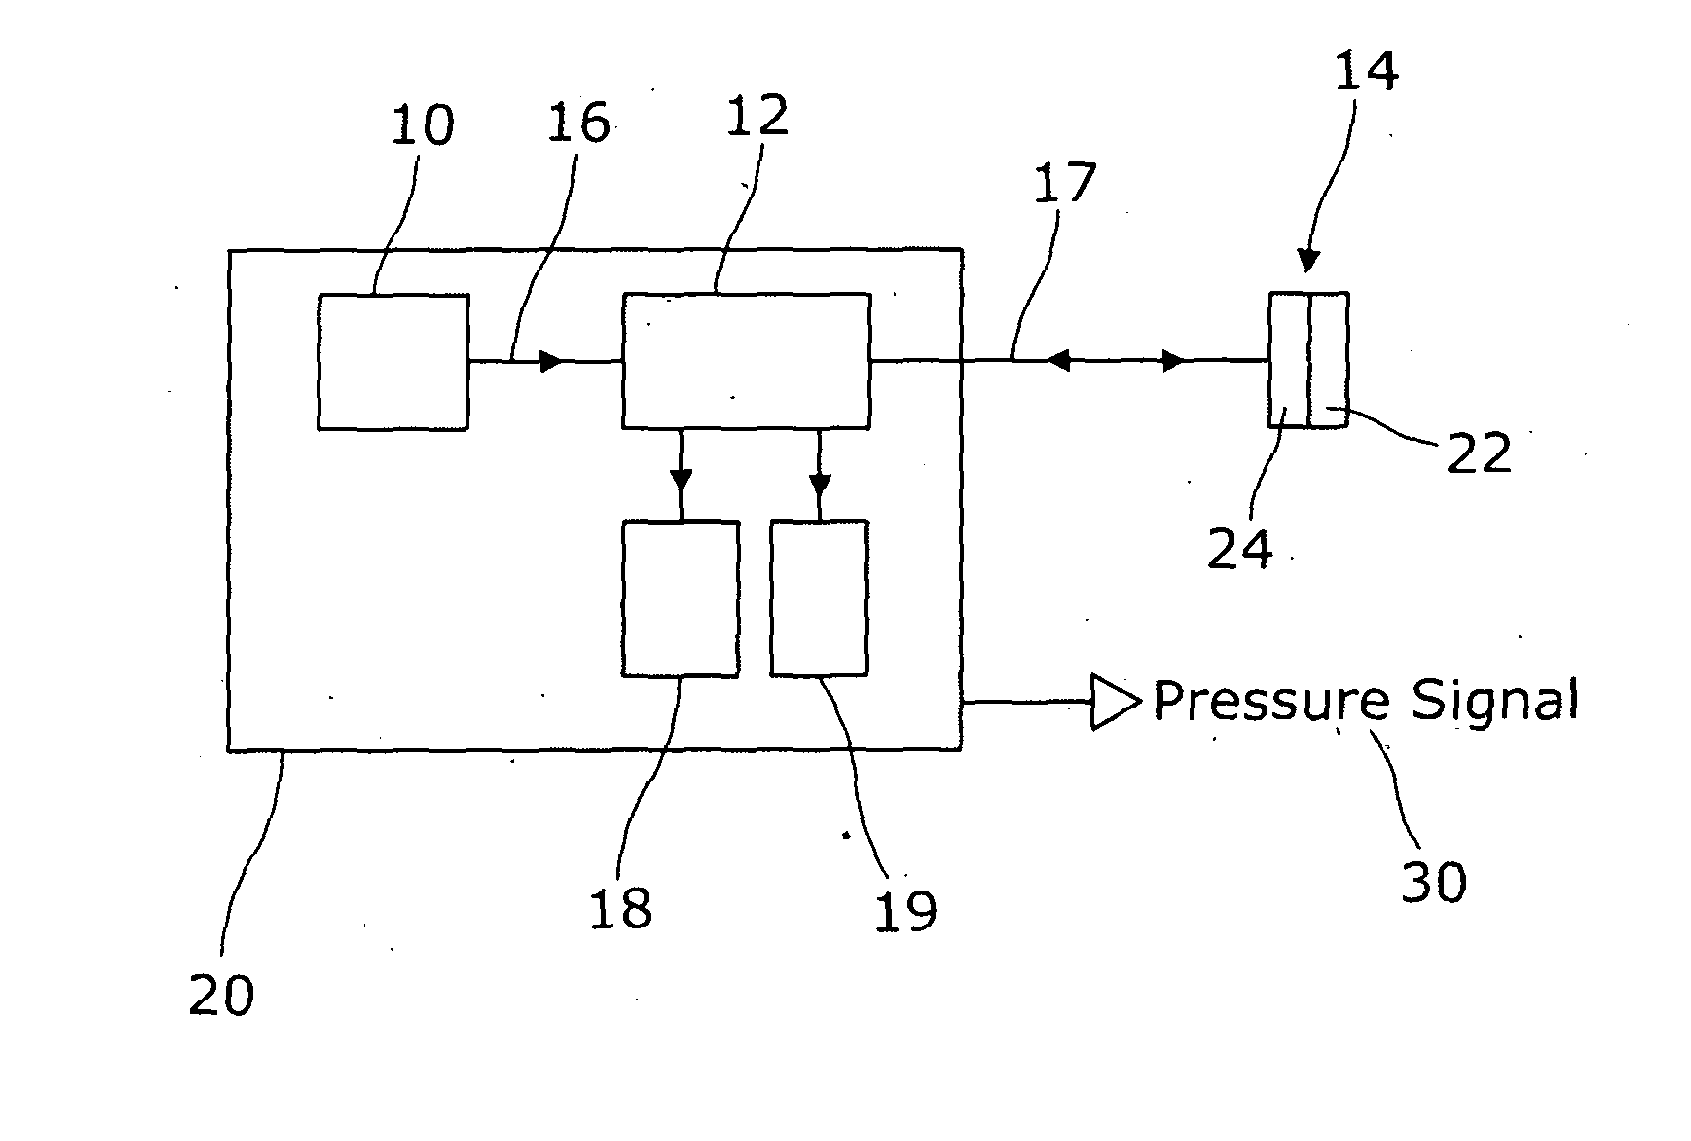 Optical pressure sensor